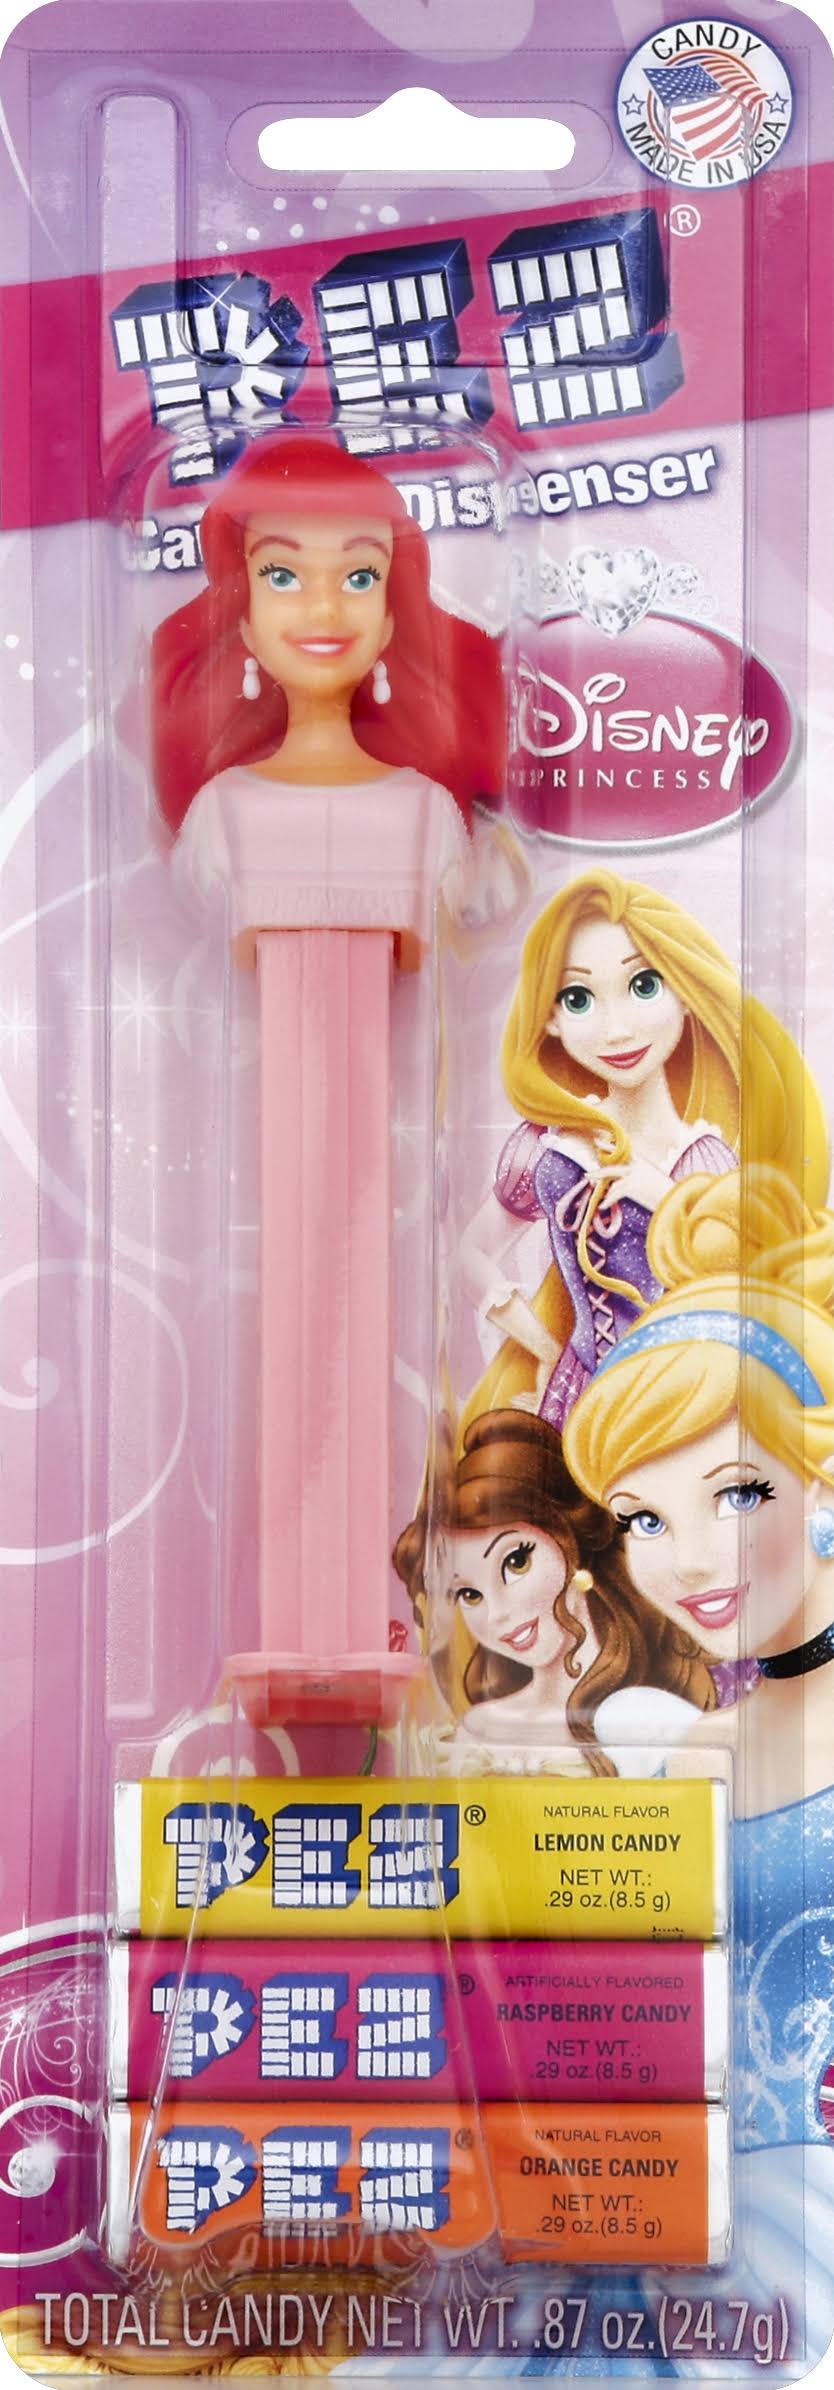 Pez Disney Princess Dispenser, 1-Count (Pack of 6)